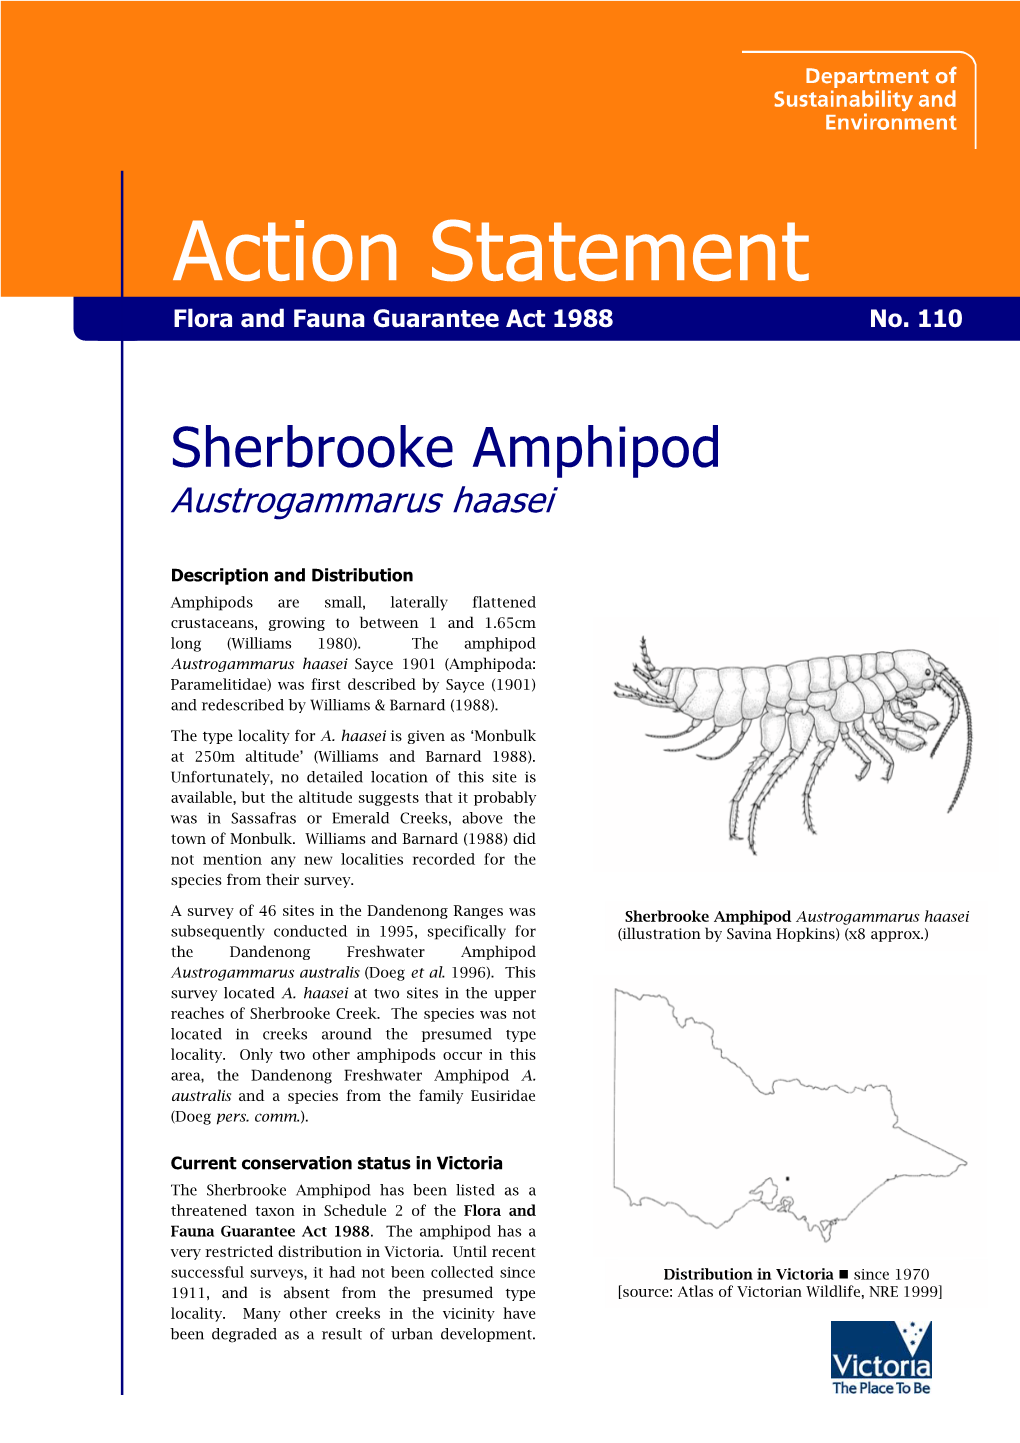 Sherbrooke Amphipod (Austrogammarus